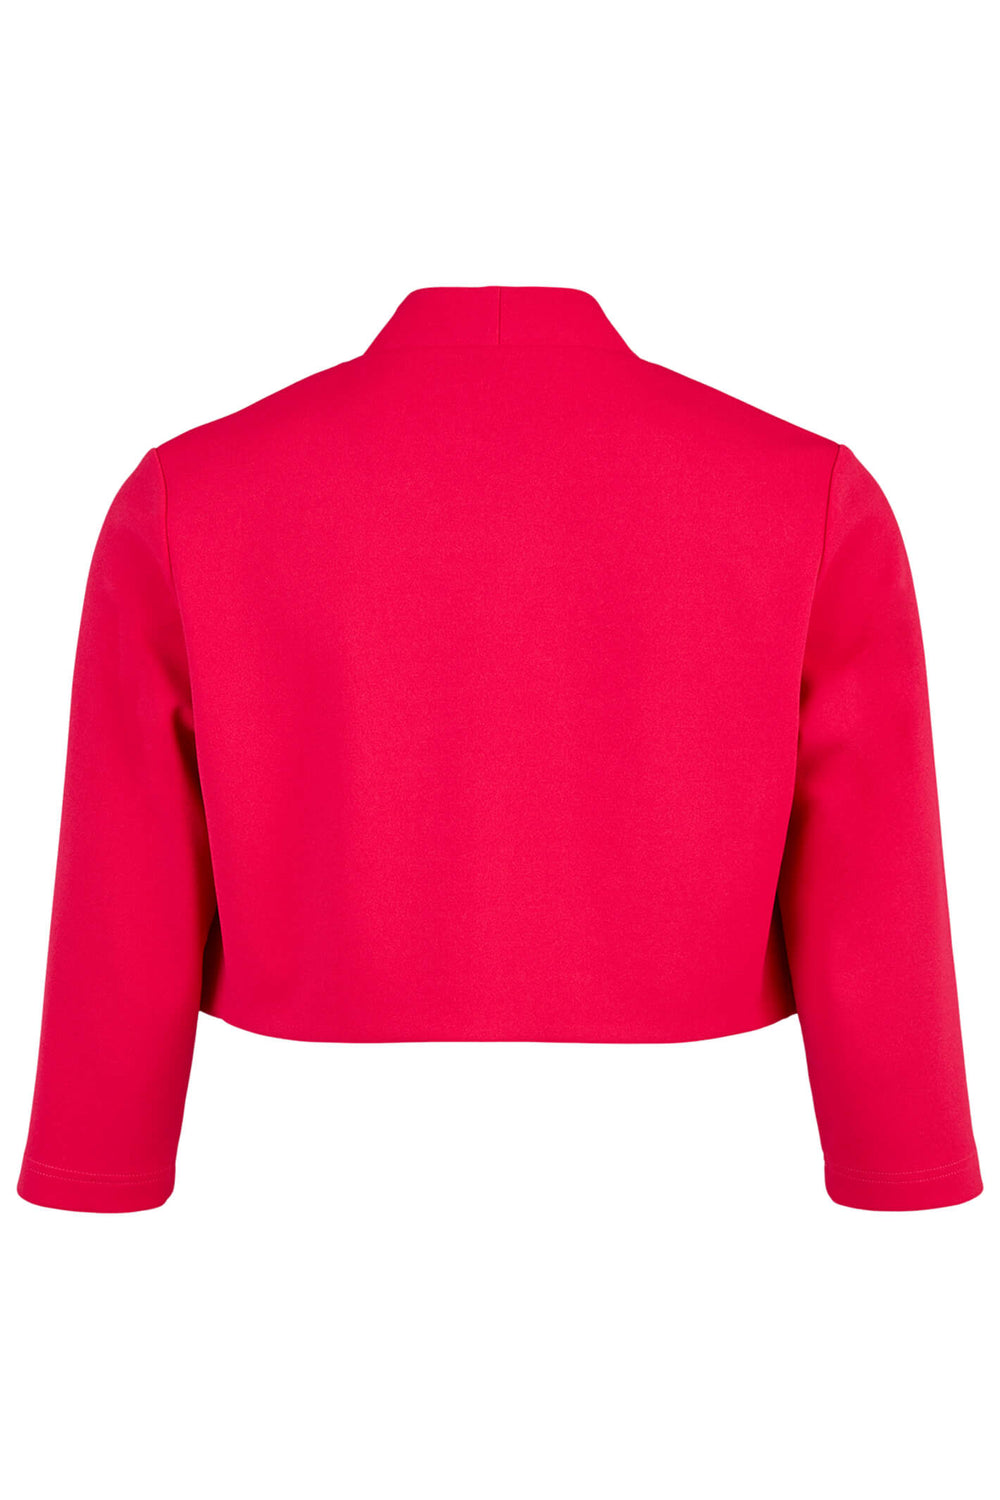 Tia 77605 44 Cerise Pink Bolero Jacket - Experience Boutique